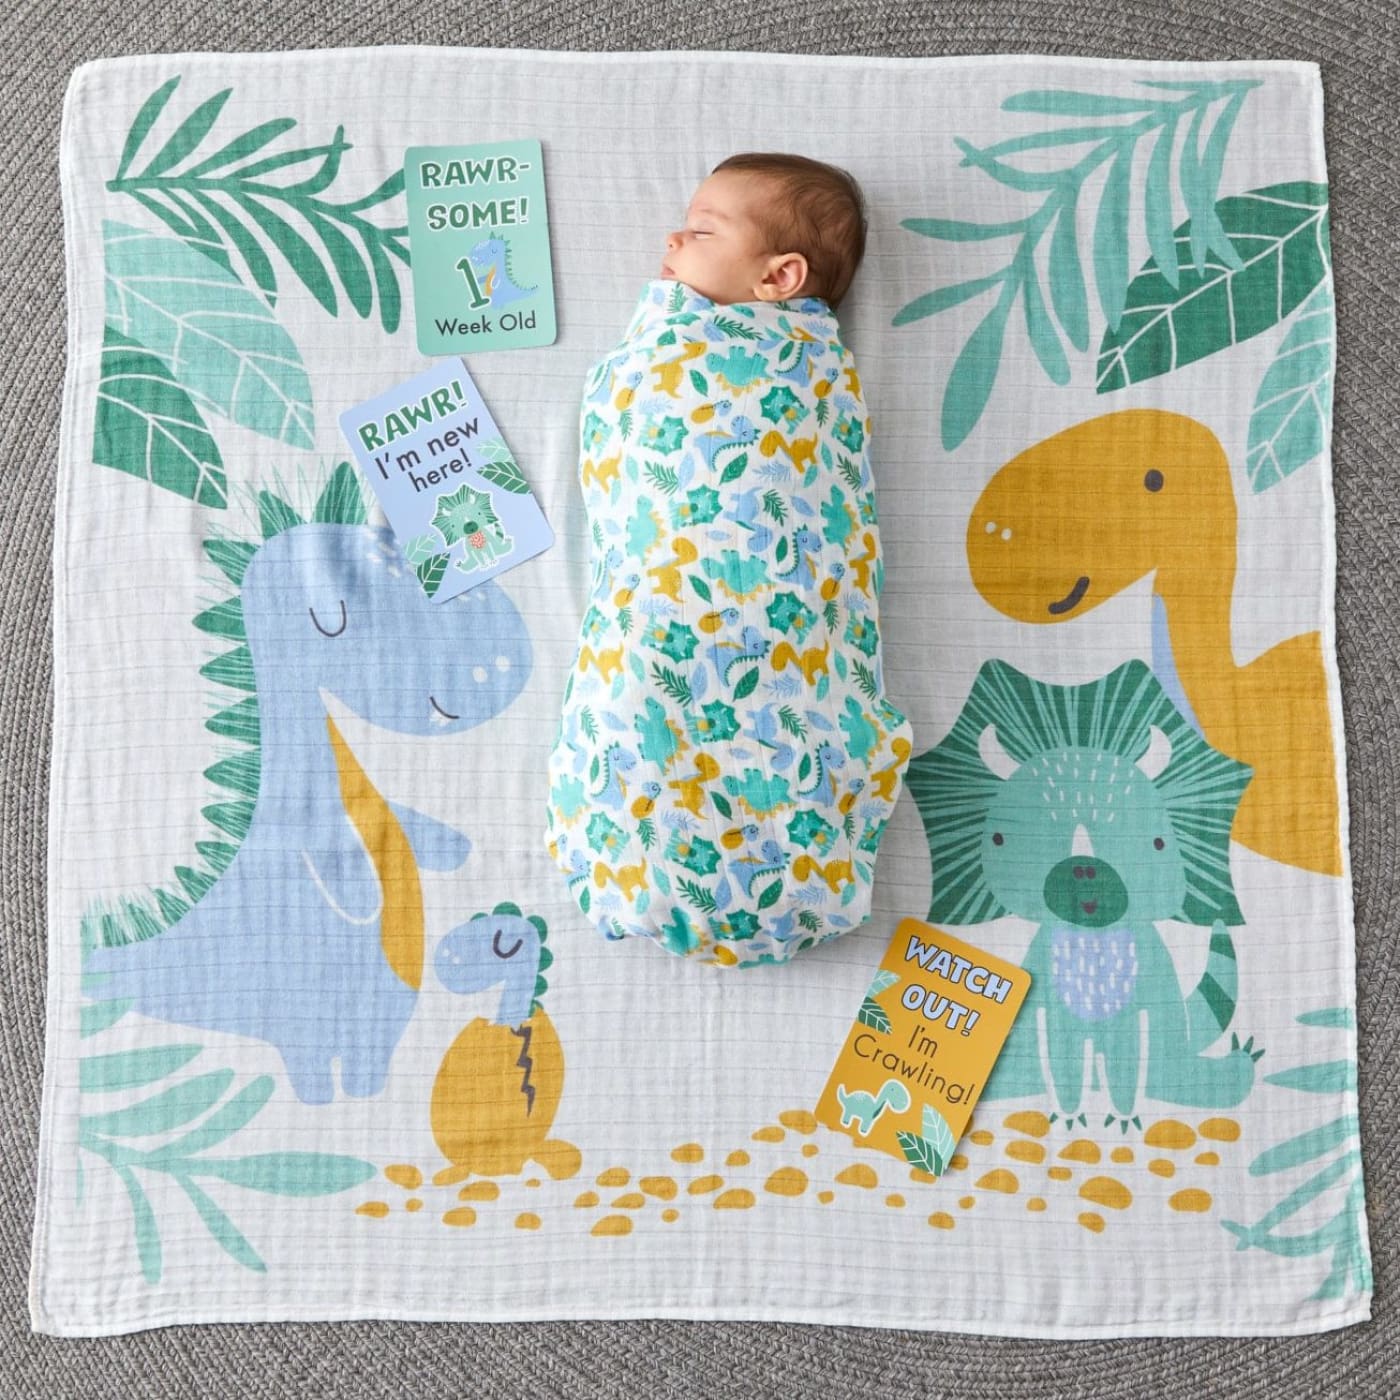 Jiggle & Giggle Cotton Muslin Blanket and Baby Milestone Photo Cards Set - Dinosaurs - Dinosaurs - GIFTWARE - MILESTONE BLOCKS/CARDS